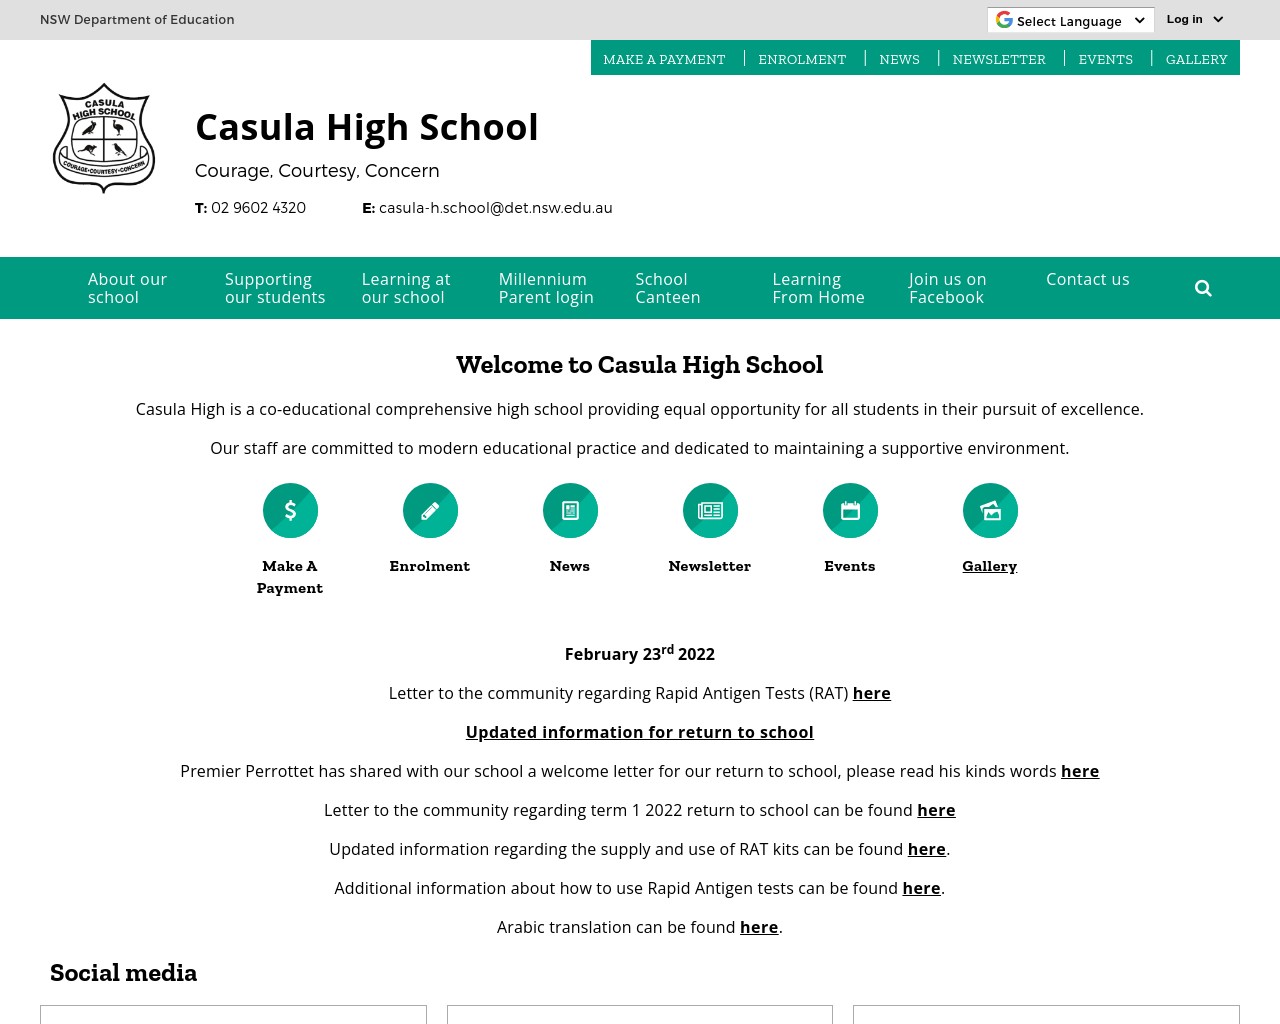 Casula High School